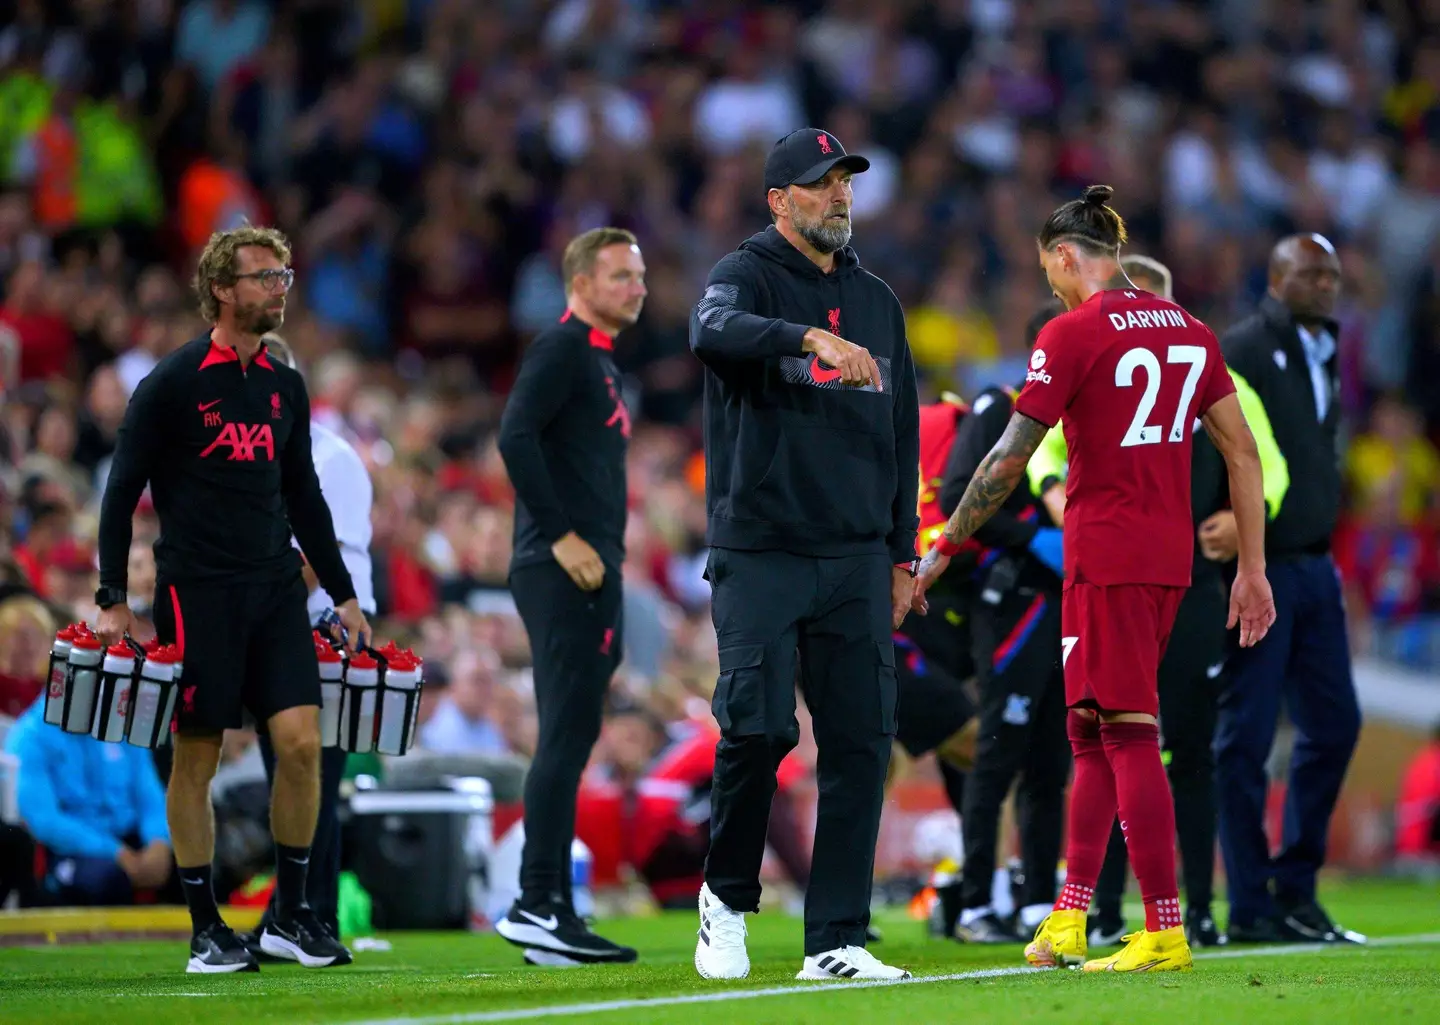 Nunez walks past Liverpool manager Jurgen Klopp after being dismissed. (Image